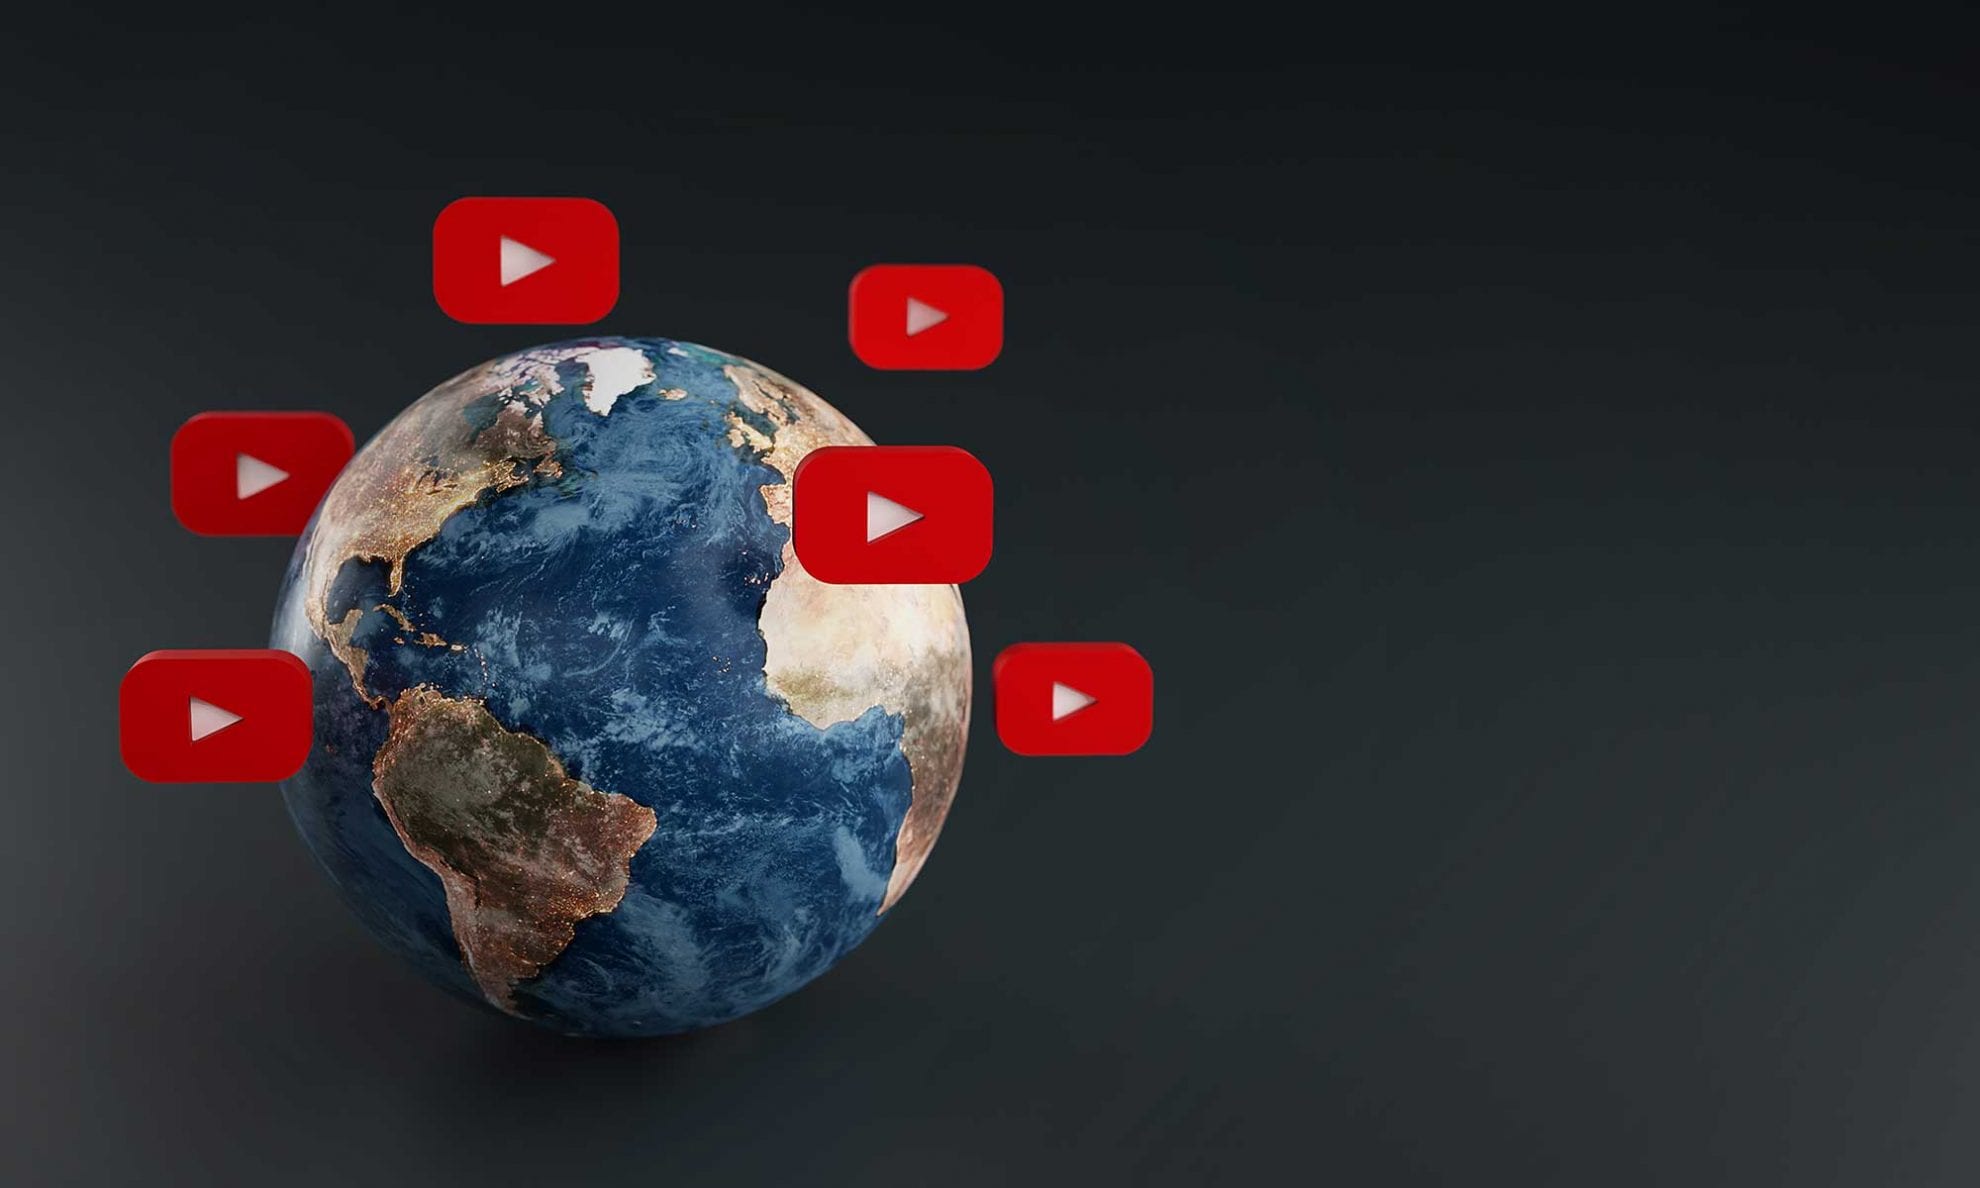 youtube-logo-icon-around-earth-popular-app-concept